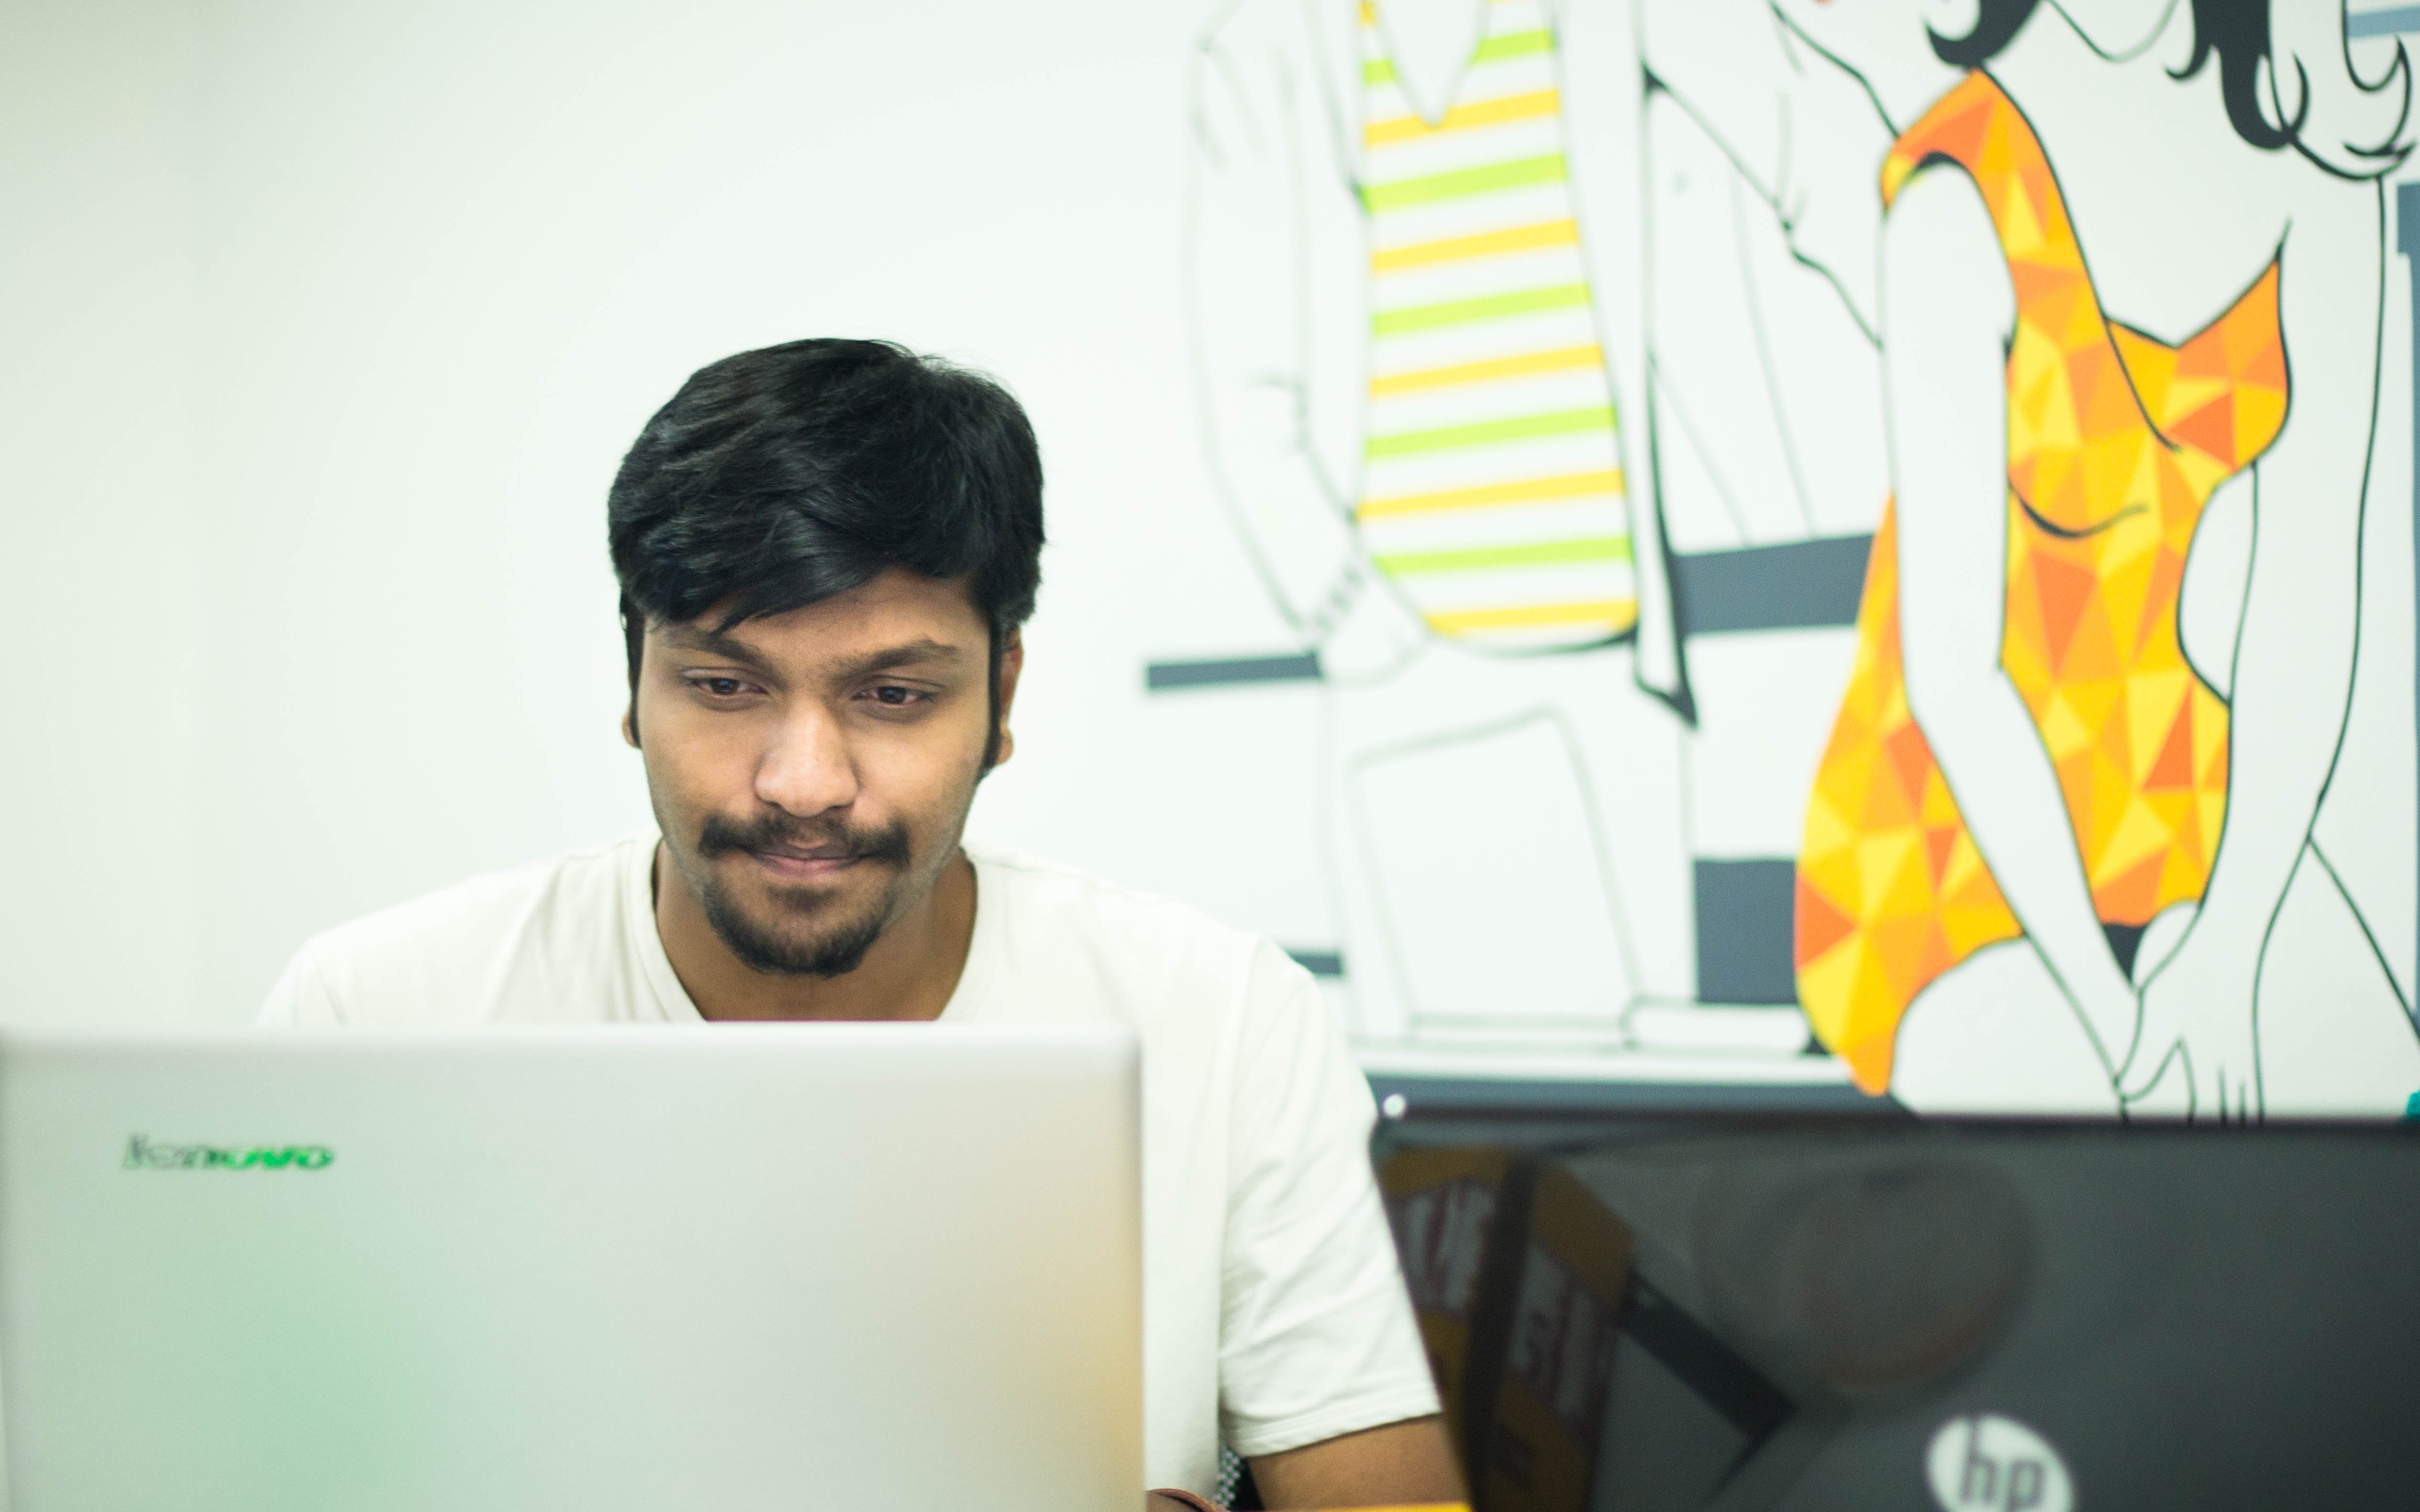 The fun-loving App developer at Grabhouse Pvt. Ltd – Raja Rajan from DSCE